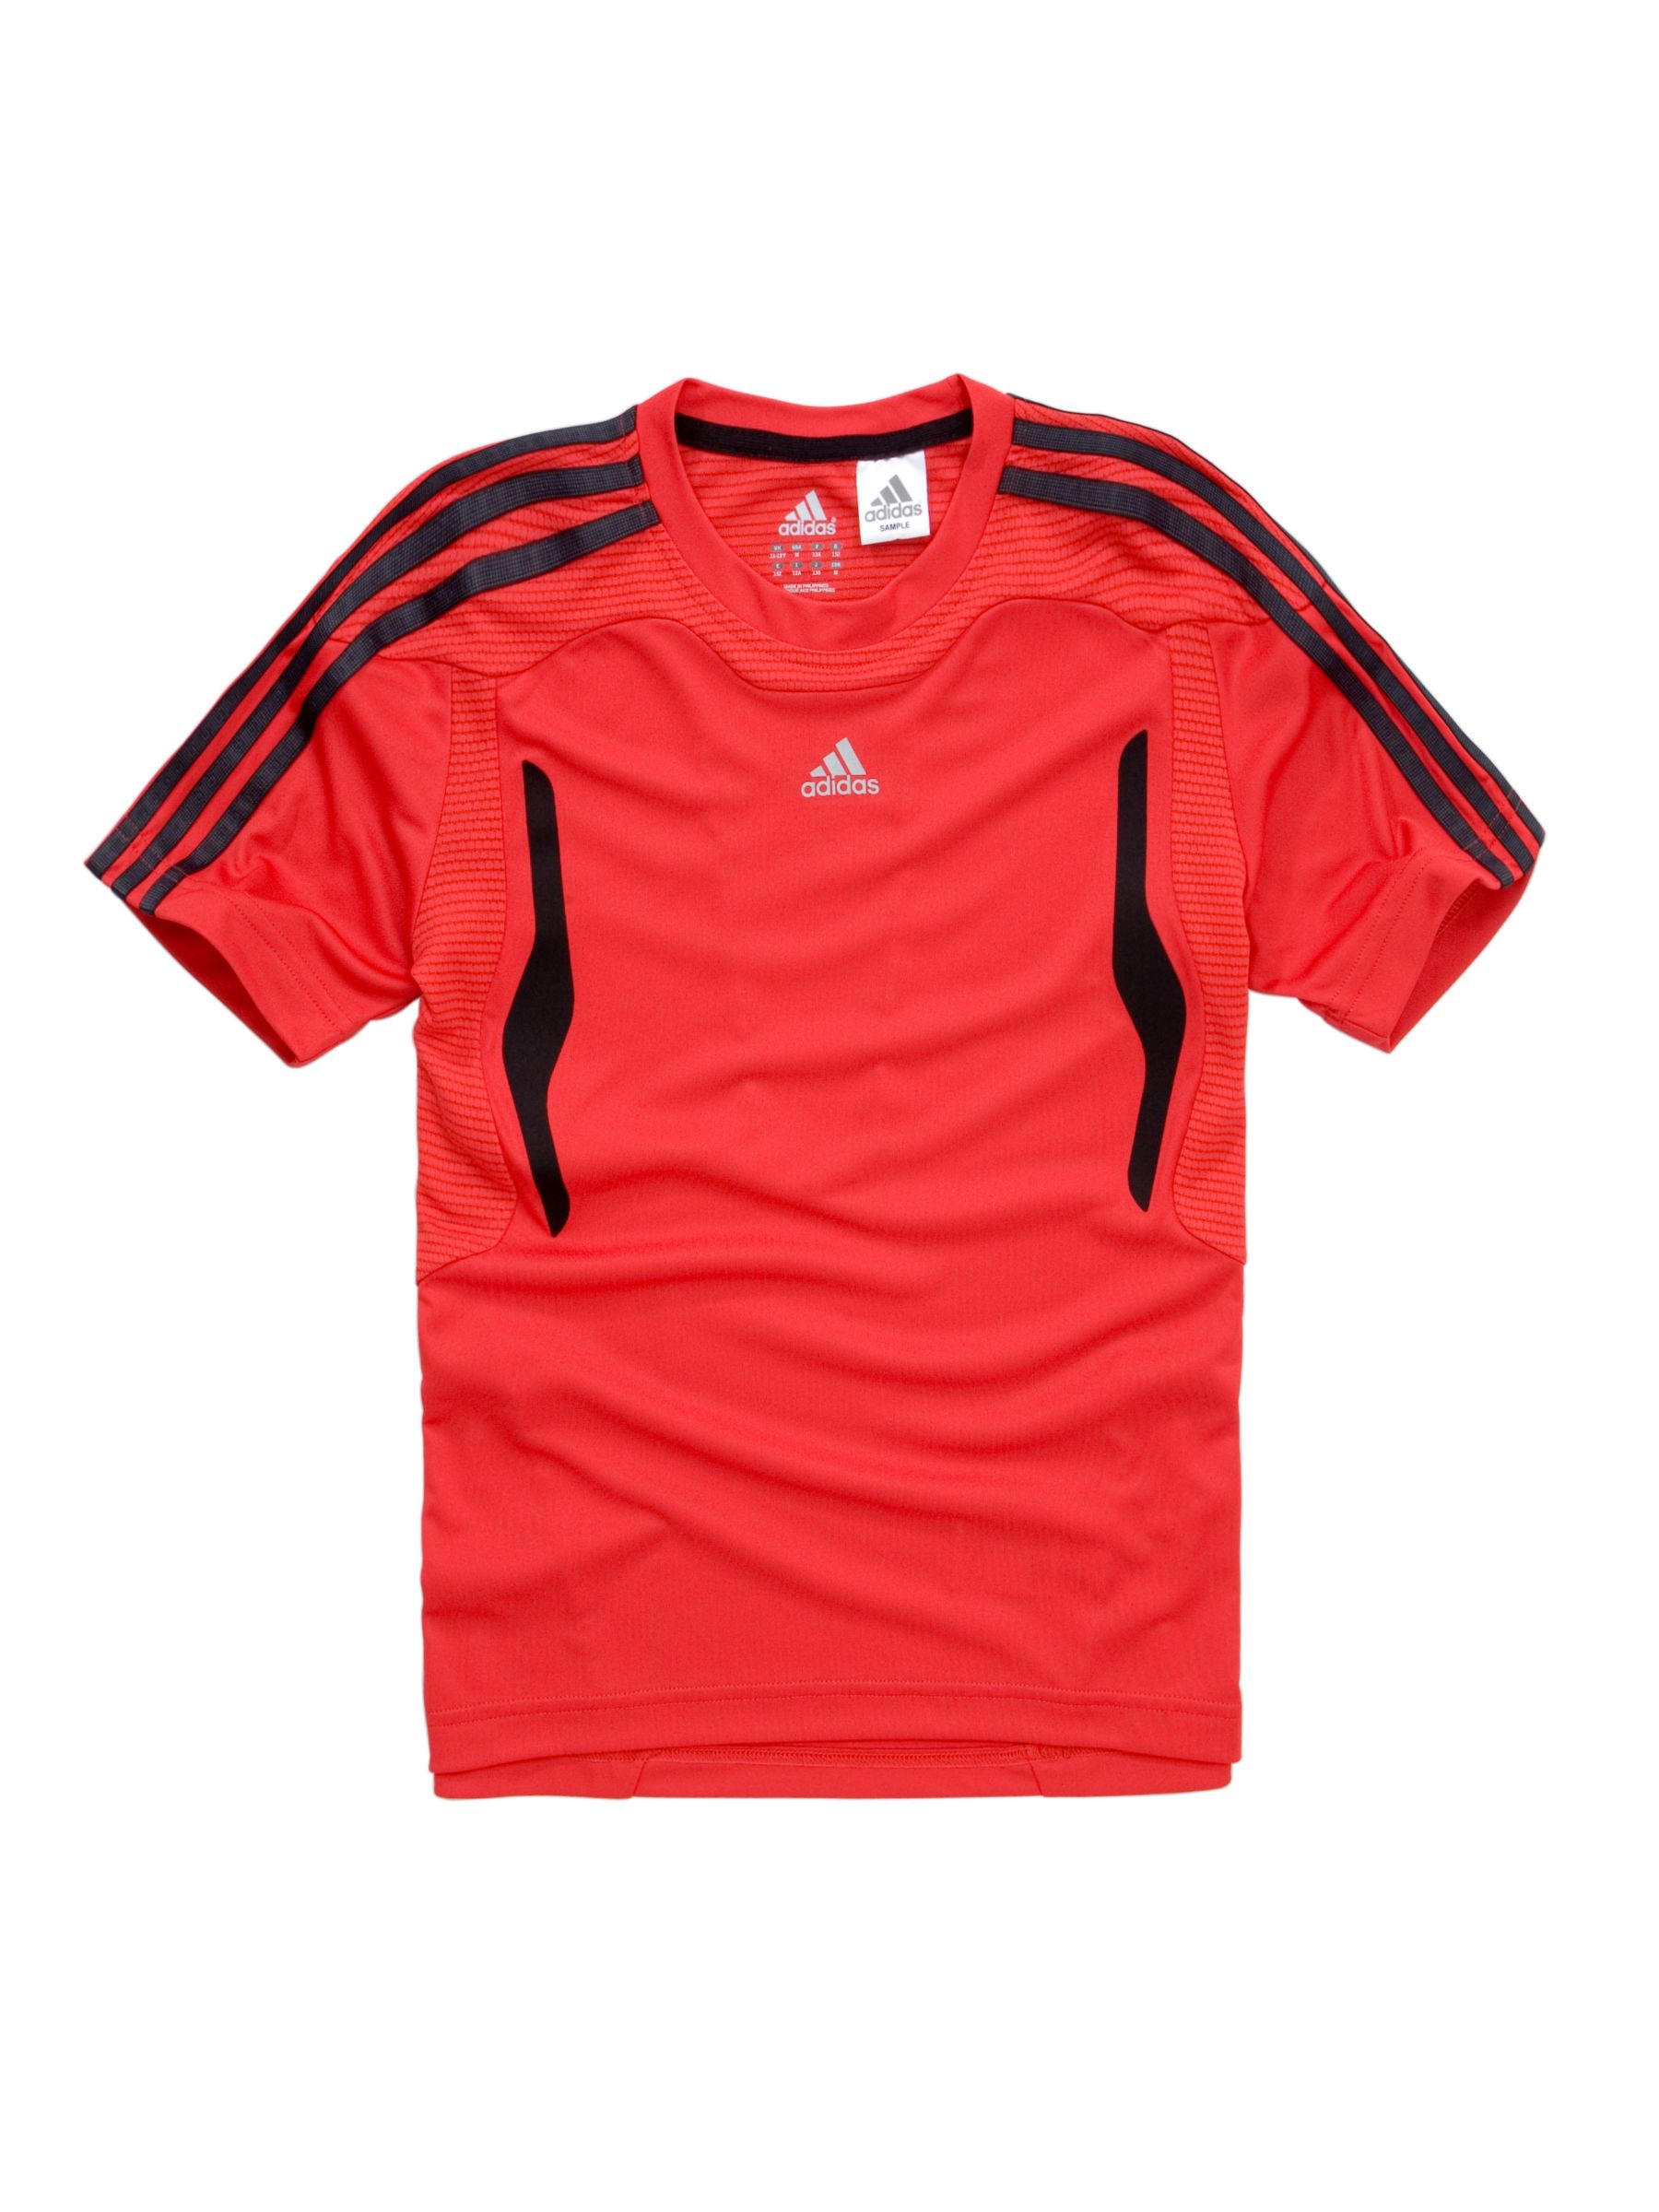 Adidas Clima 365 T-Shirt, Red